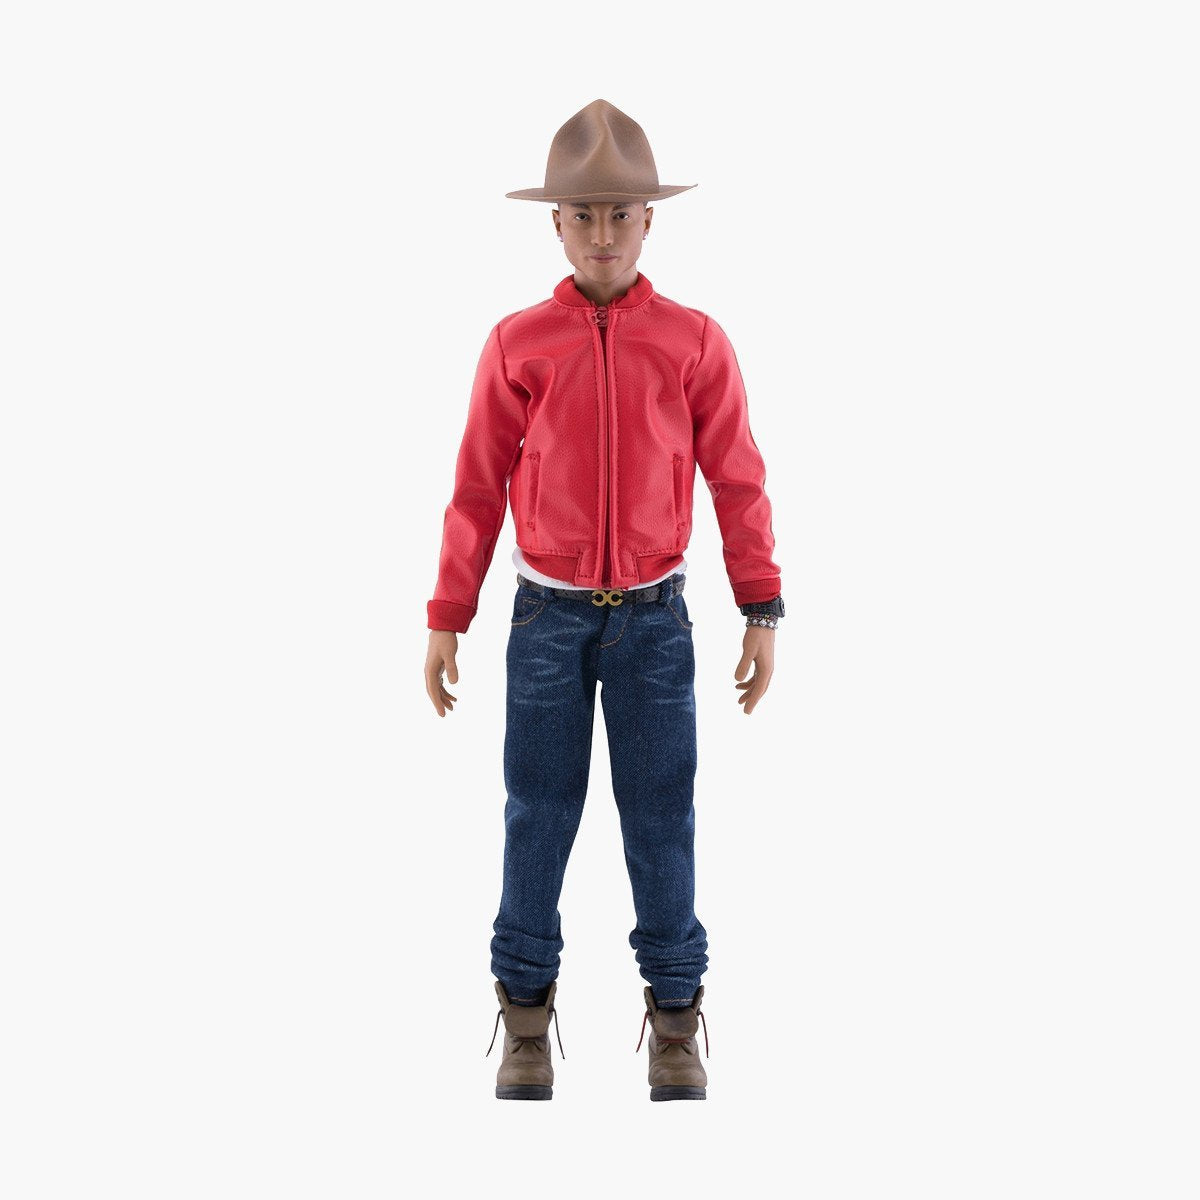 Medicom Toy Pharrell Williams Doll Assorted